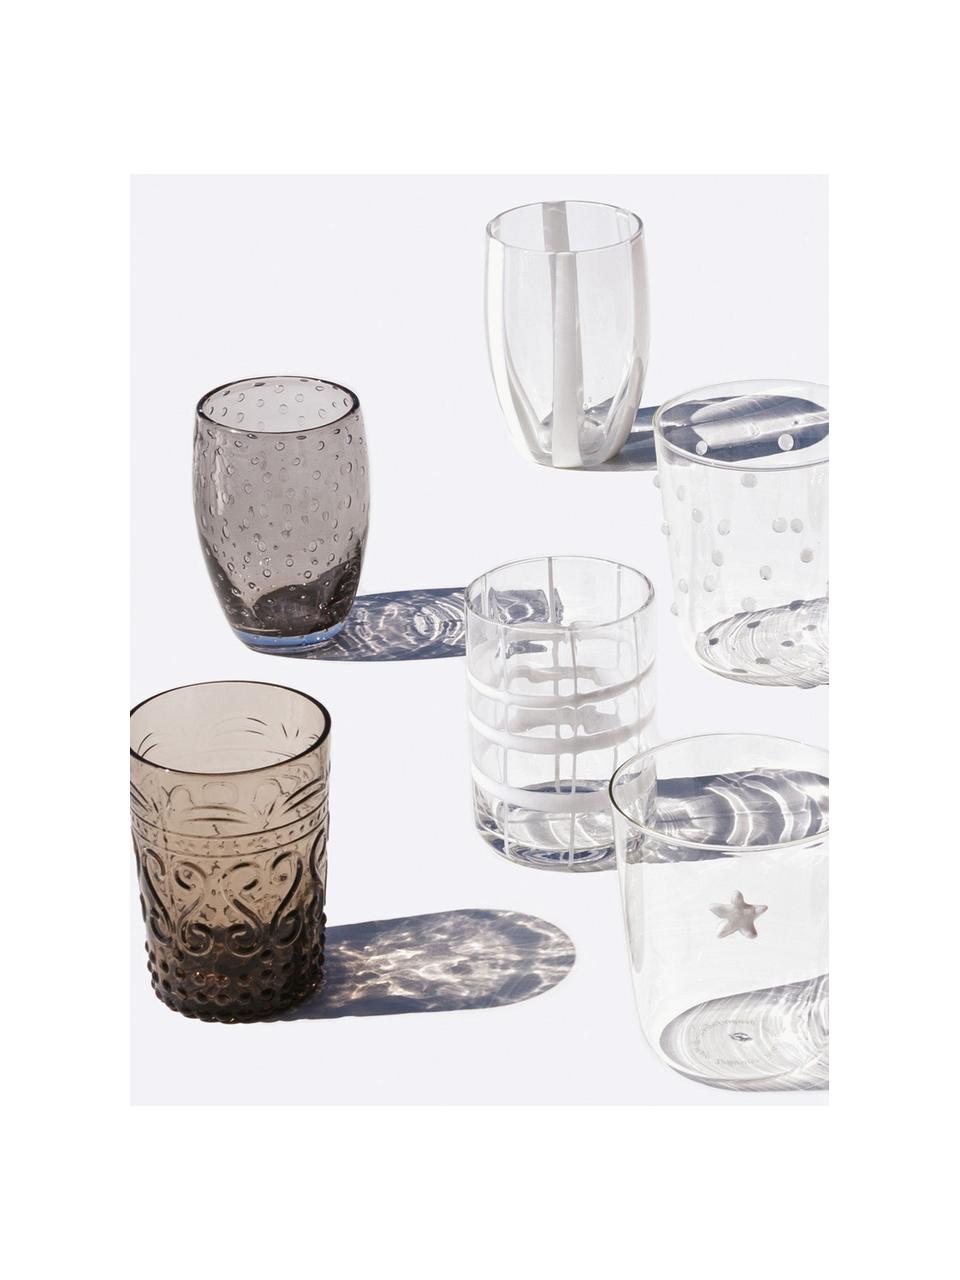 Set de vasos artesanales Melting, 6 uds., Vidrio, Gris transparente, Set de diferentes tamaños